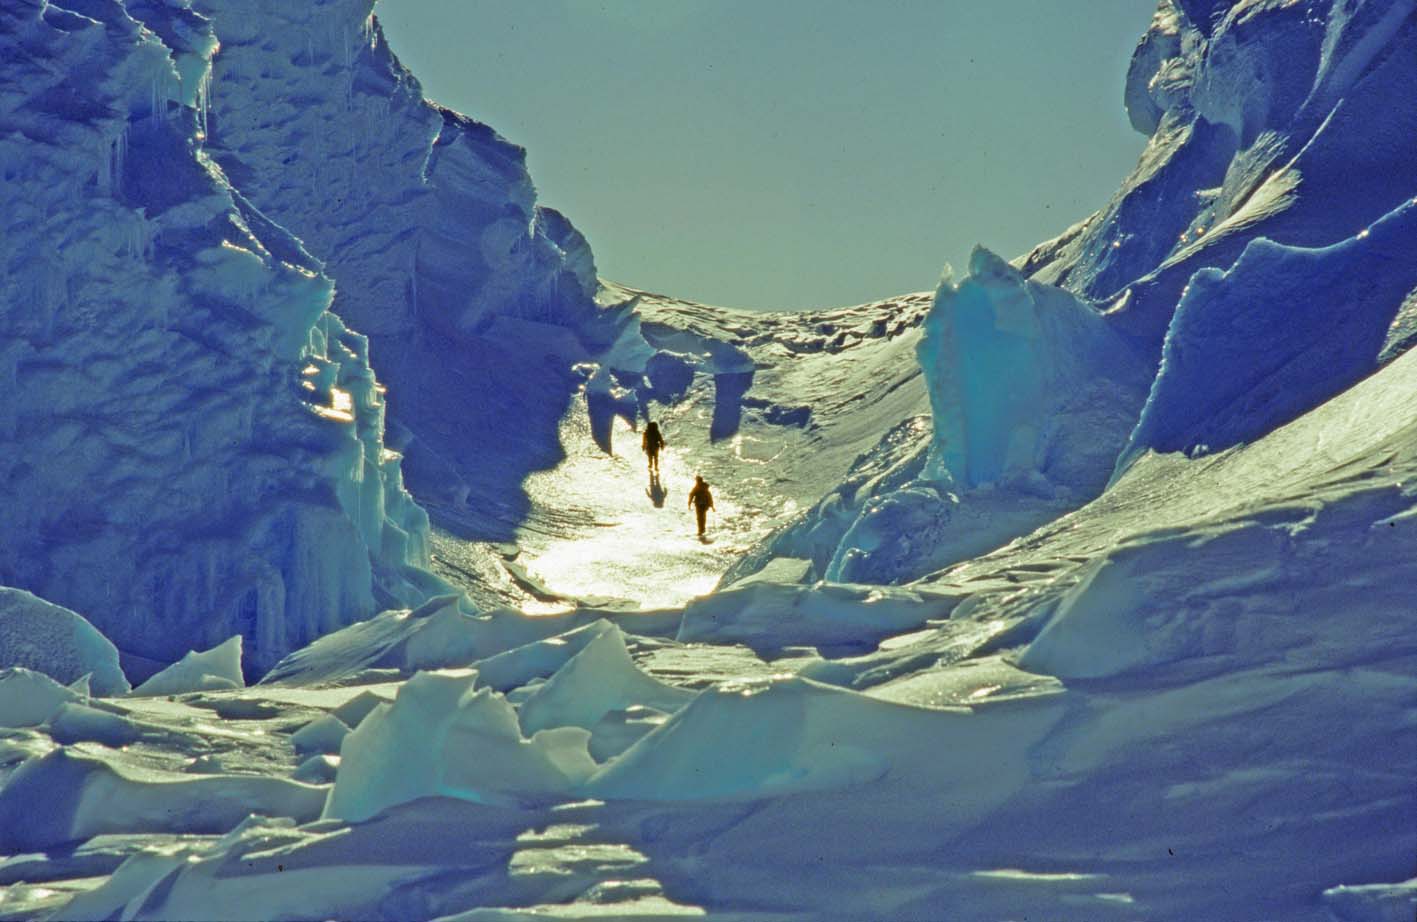 Leaving Aladin's Cave, Brunt Ice Shelf, Antarctica